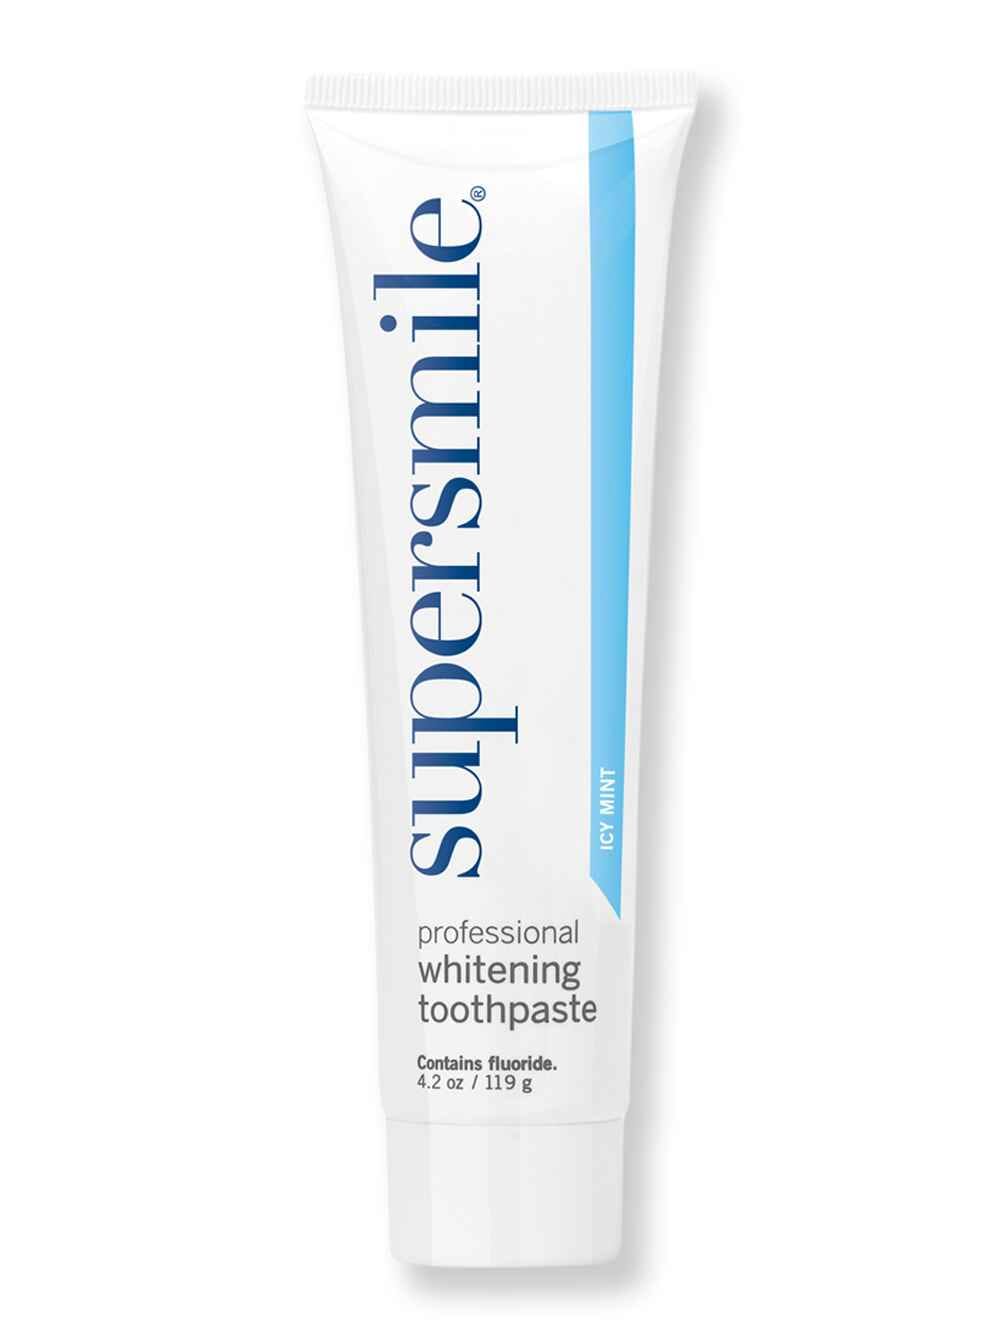 Supersmile Supersmile Professional Whitening Toothpaste Icy Mint 4.2 oz Mouthwashes & Toothpastes 